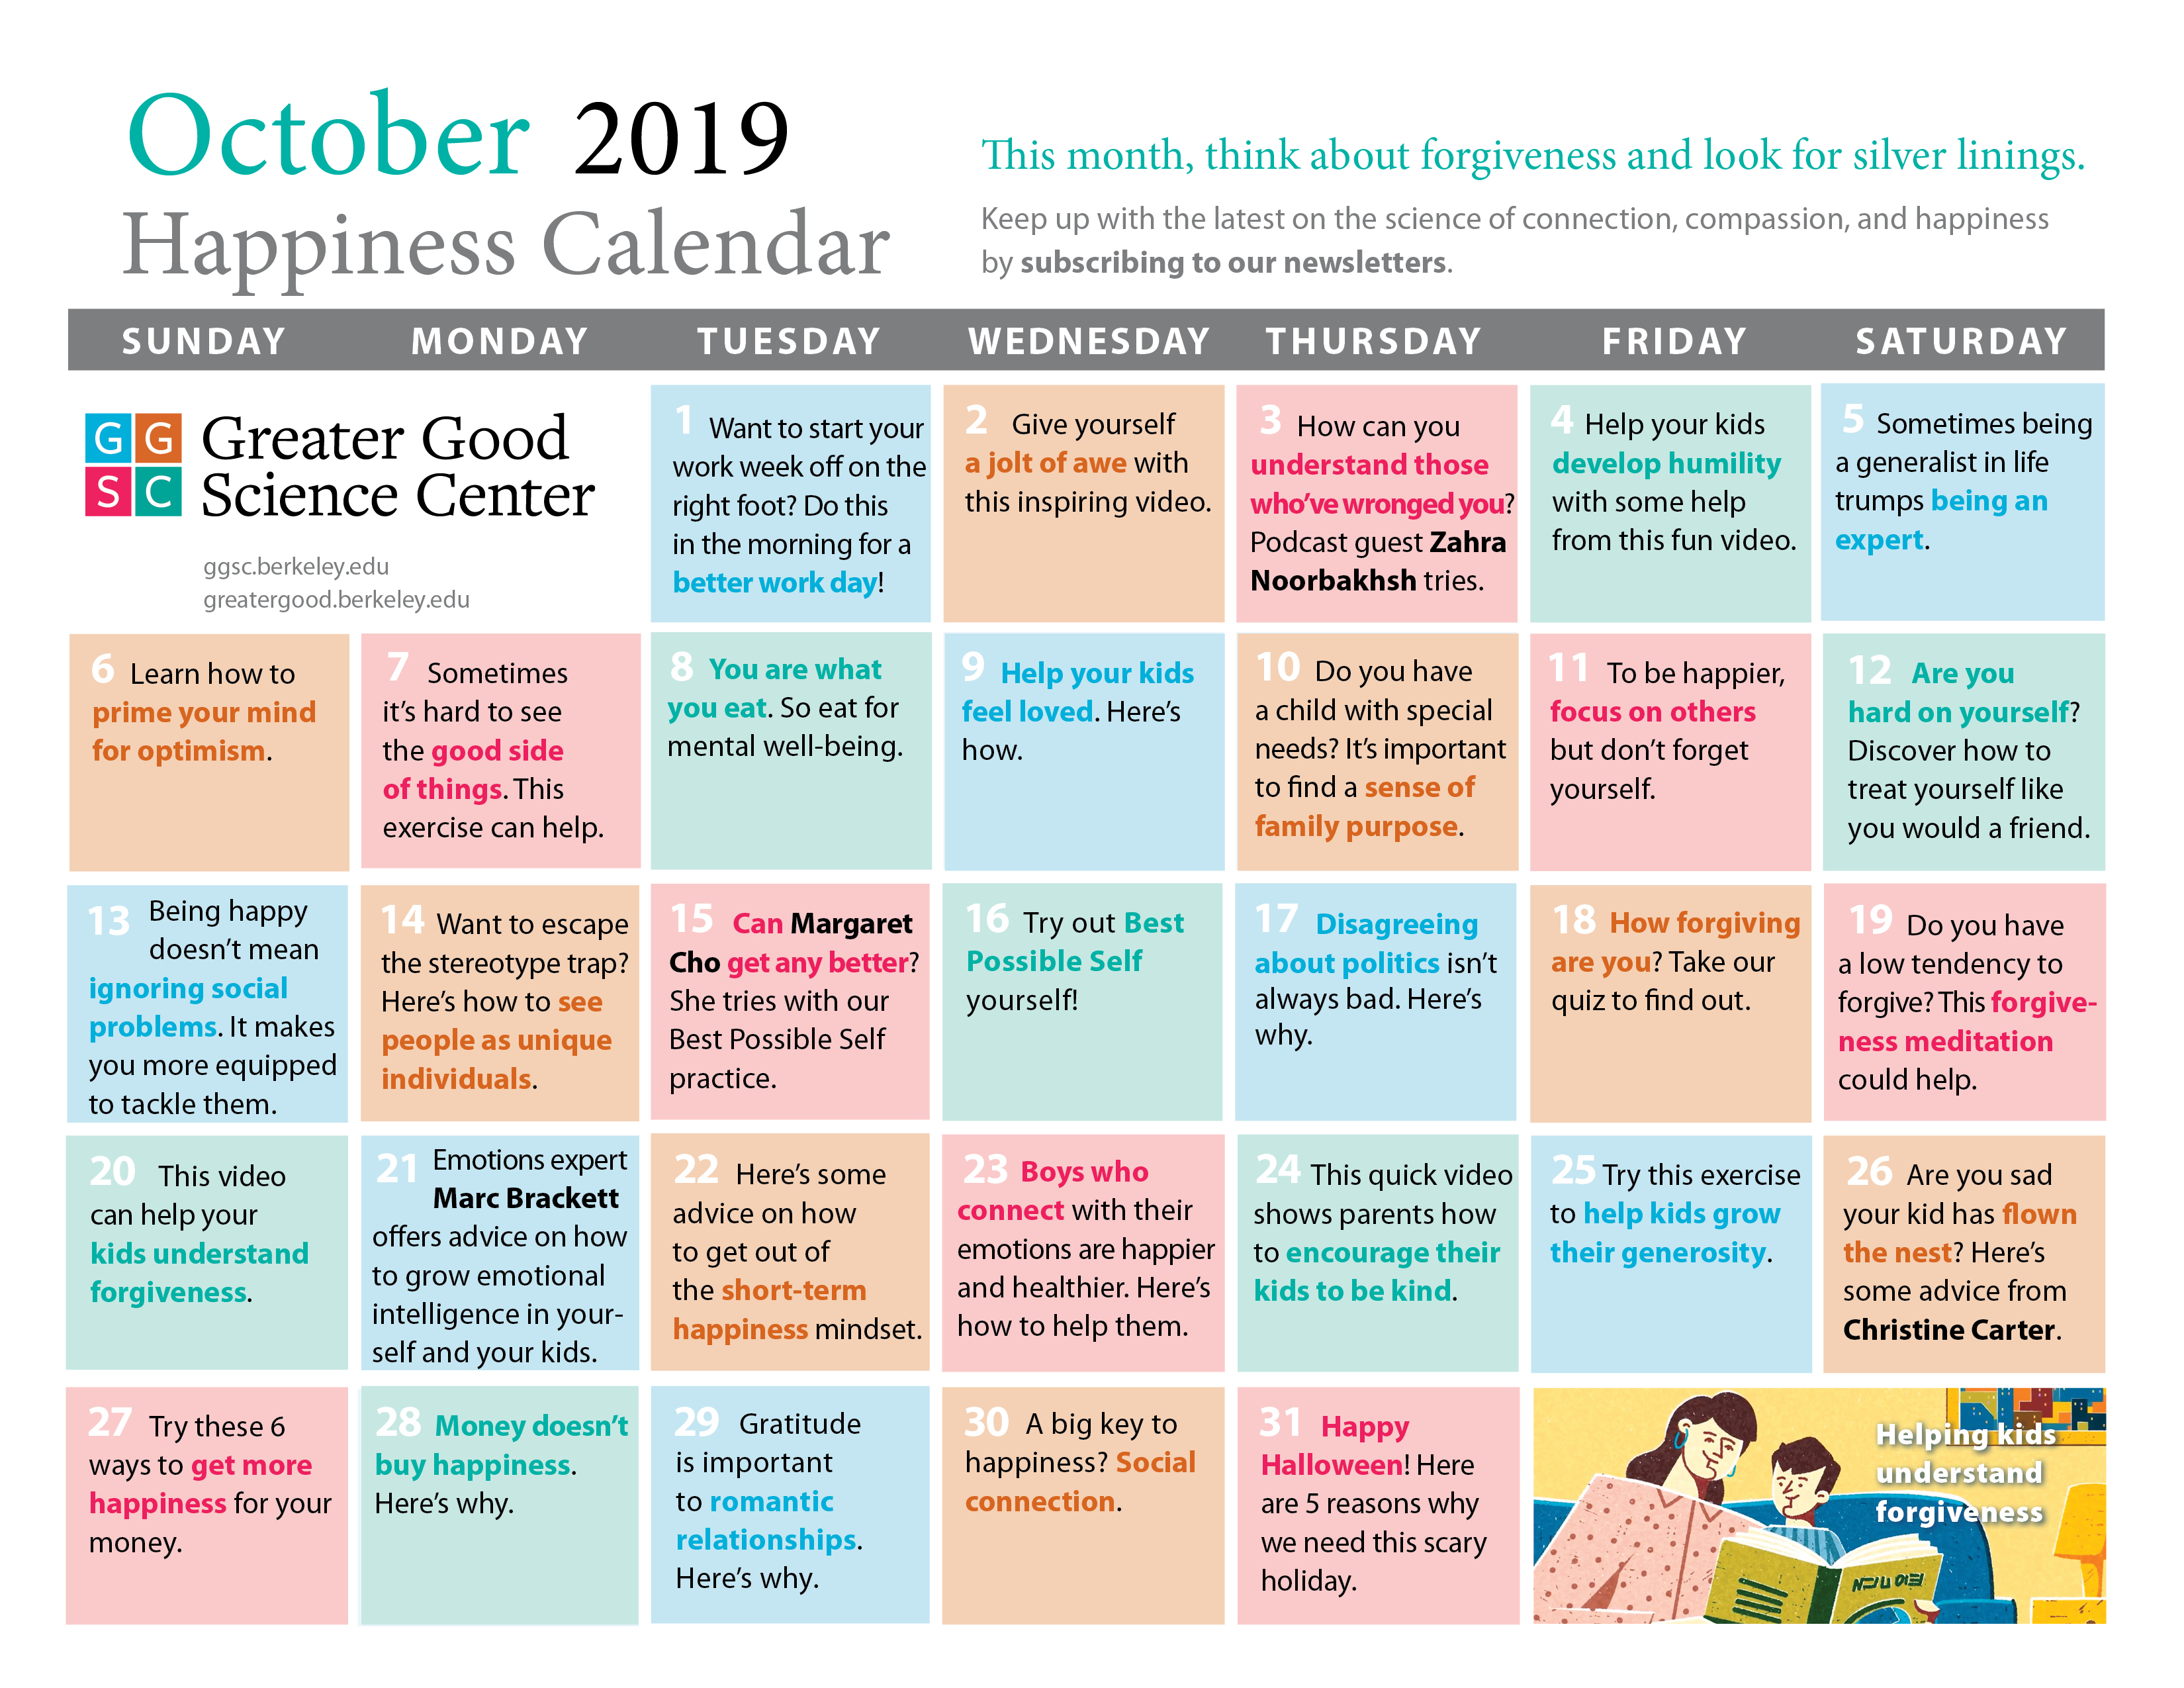 October 2019 Happiness Calendar